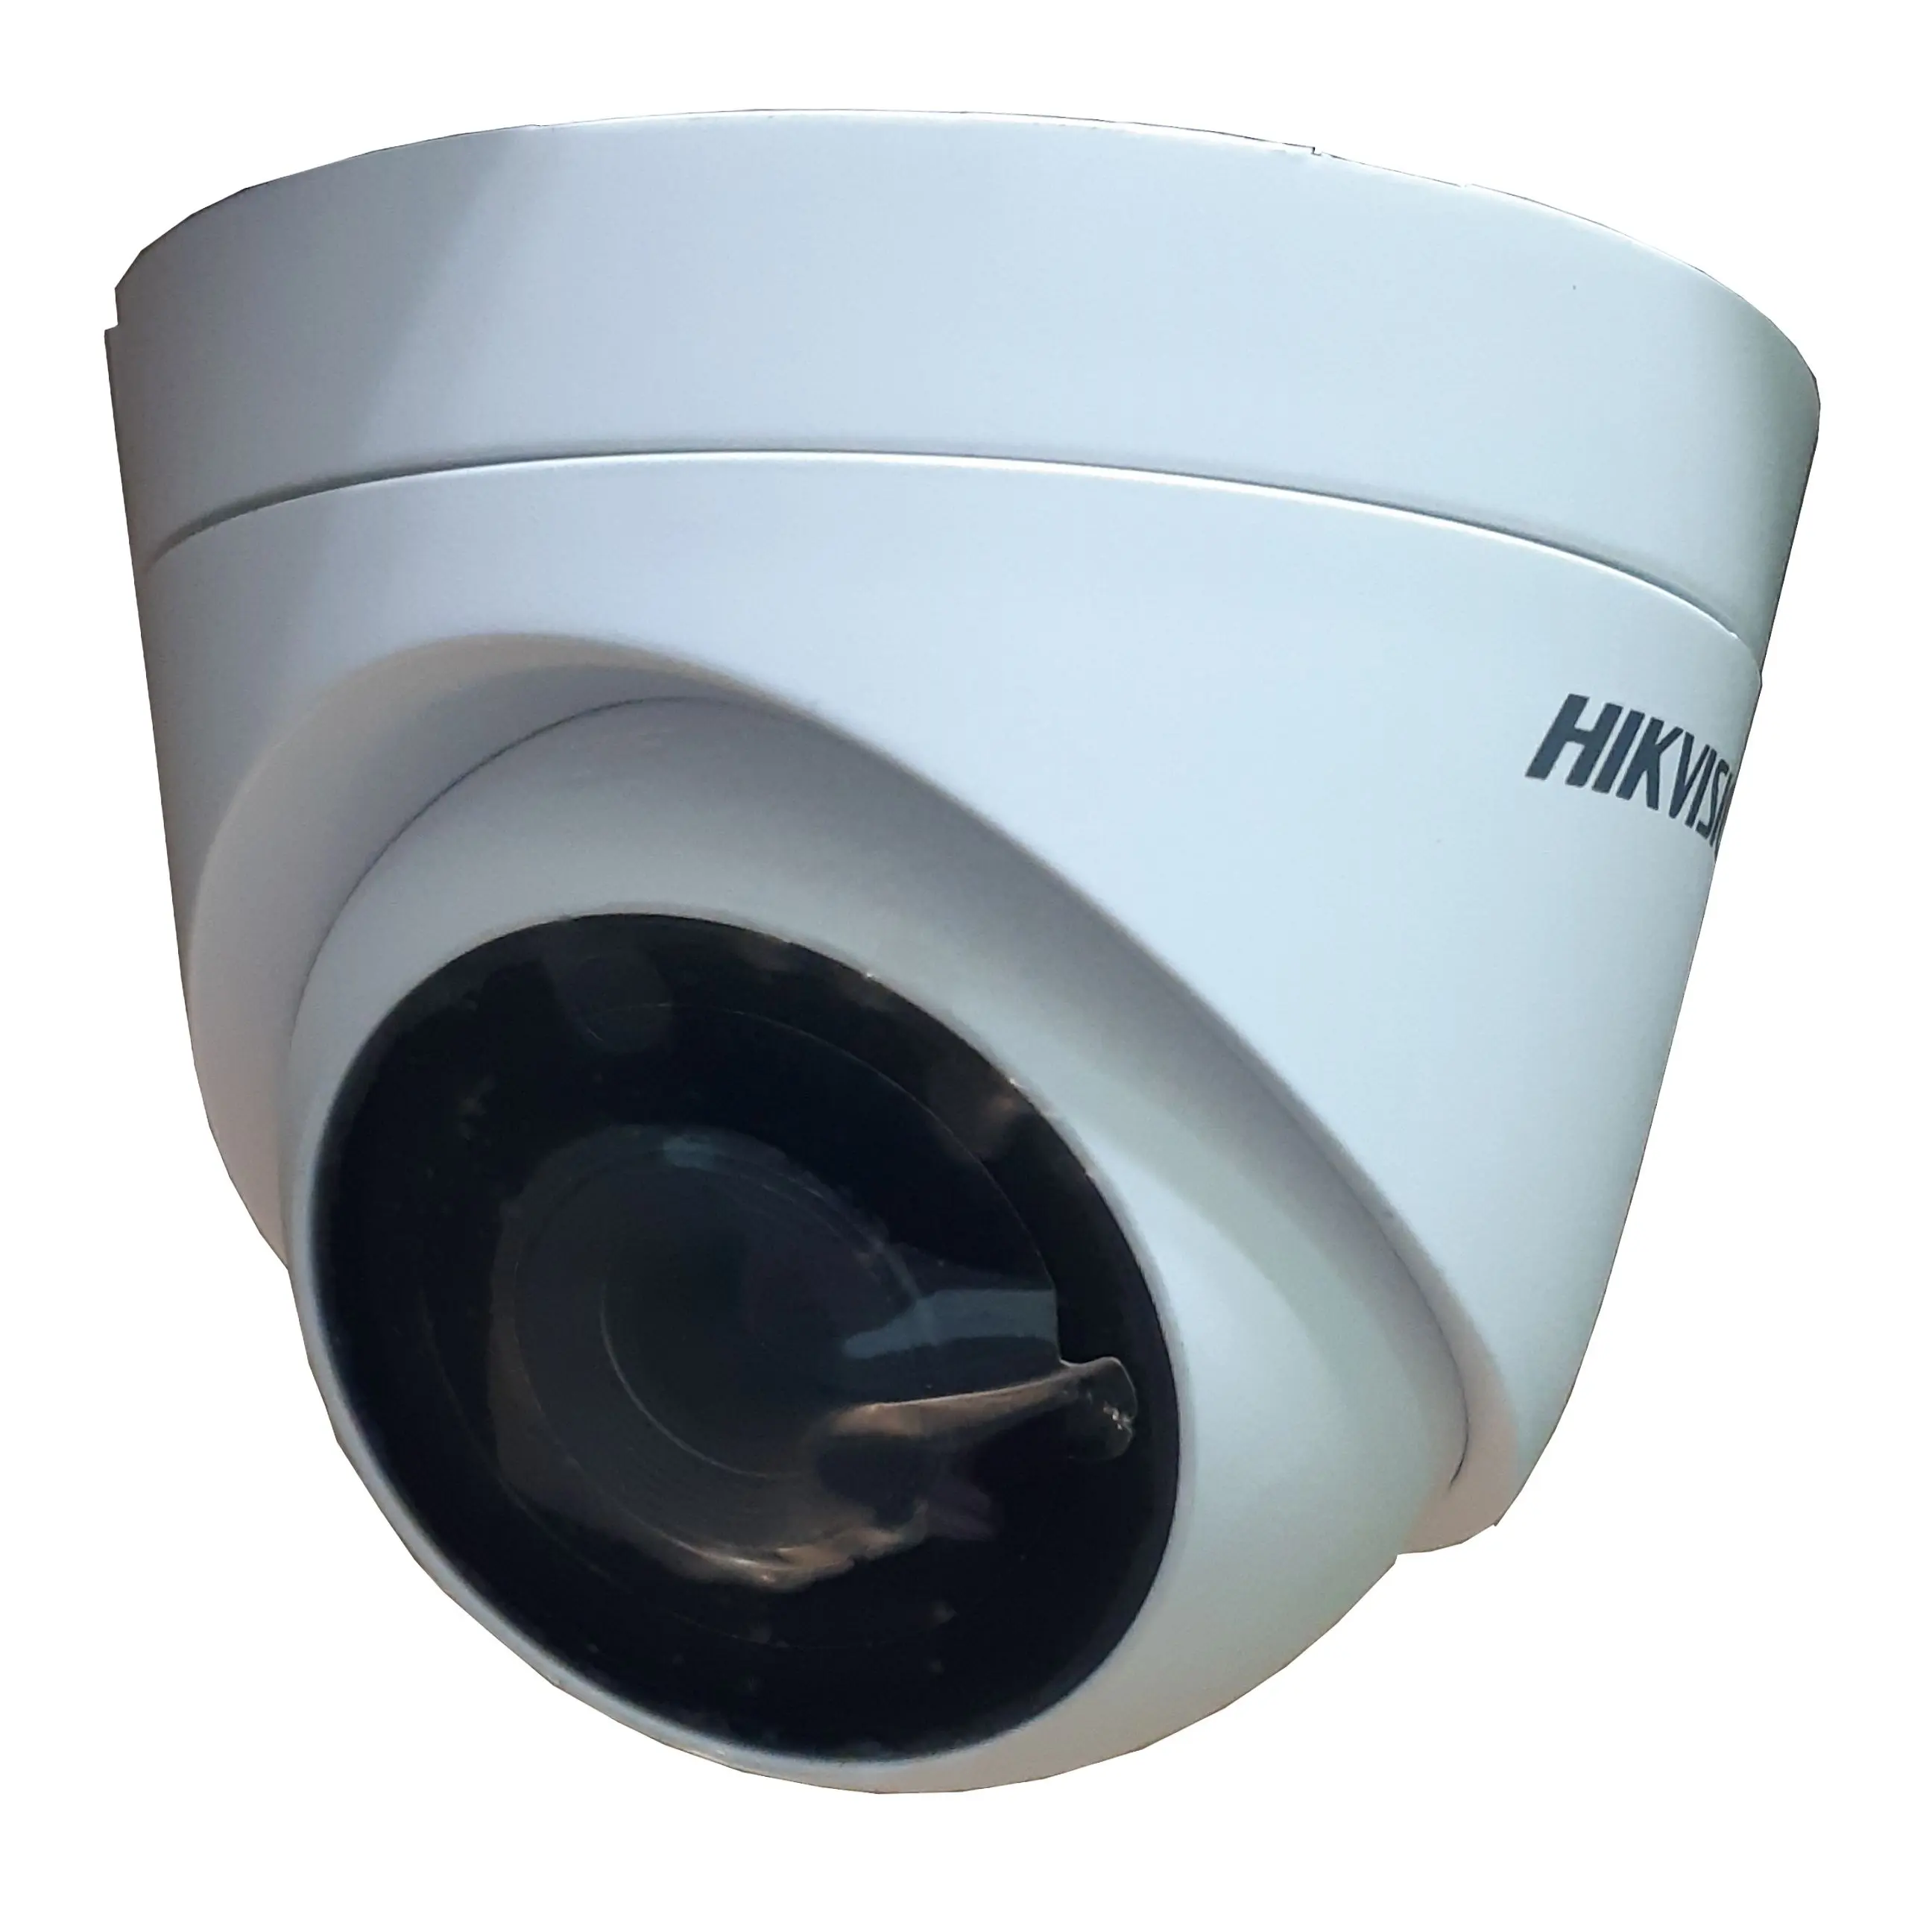 HD TVI CCTV Camera- DS-2CE56H0T-ITPF 5.0 MegaPixels IR Dome Camera